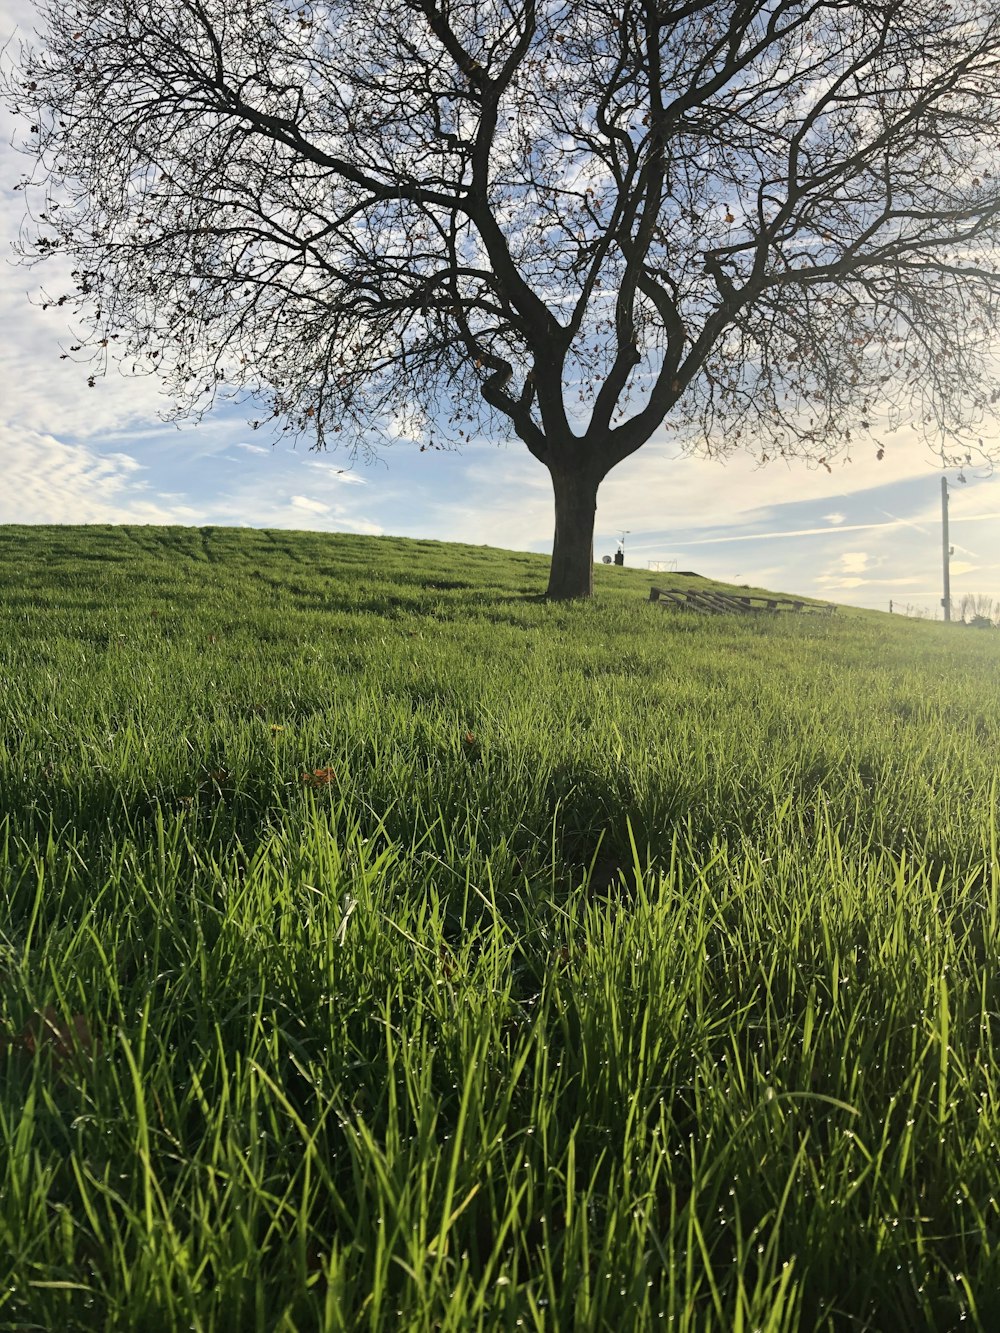 a tree in a grassy field